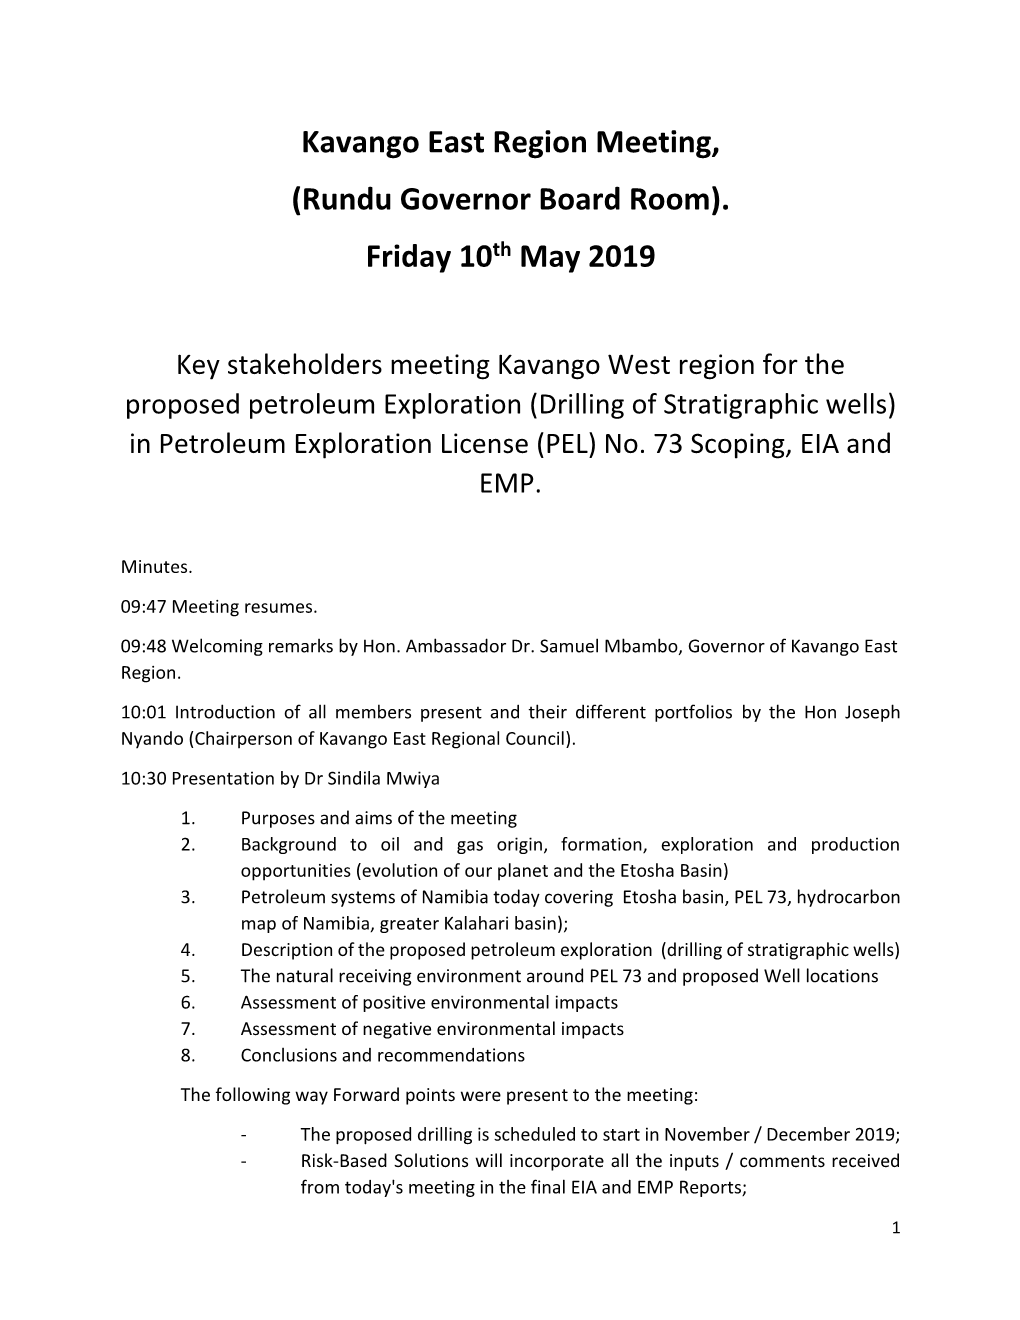 Kavango East Region Meeting, (Rundu Governor Board Room). Friday 10Th May 2019